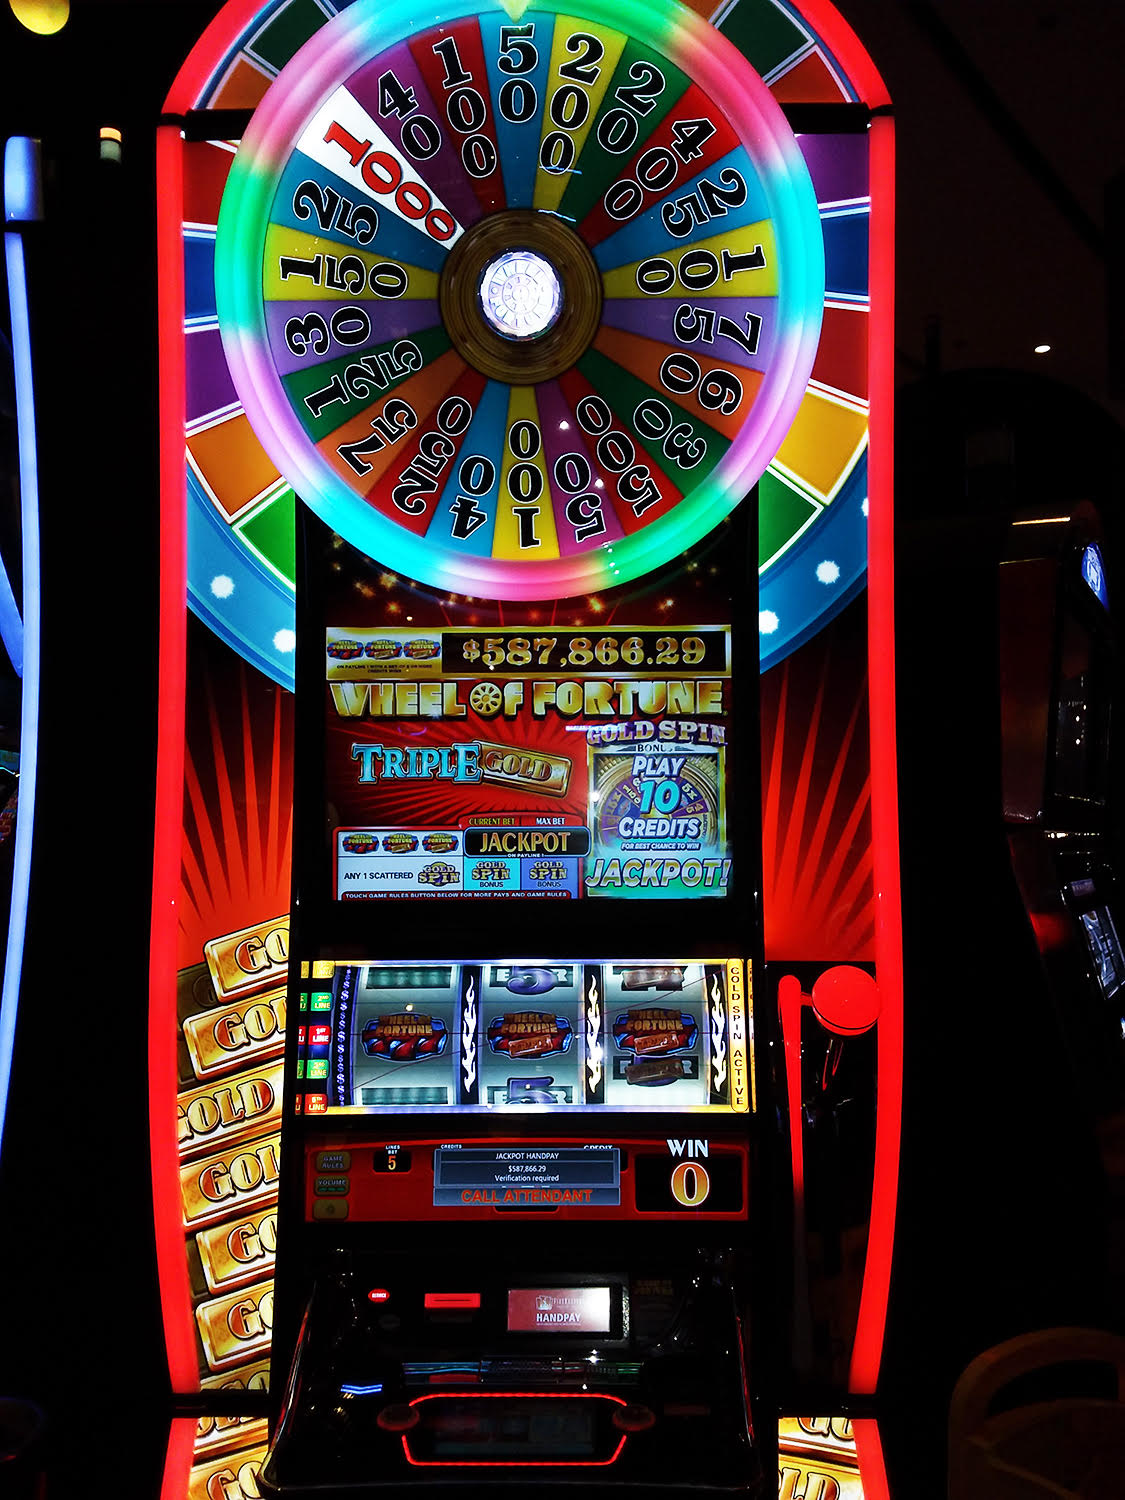 wheel of fortune like casino game